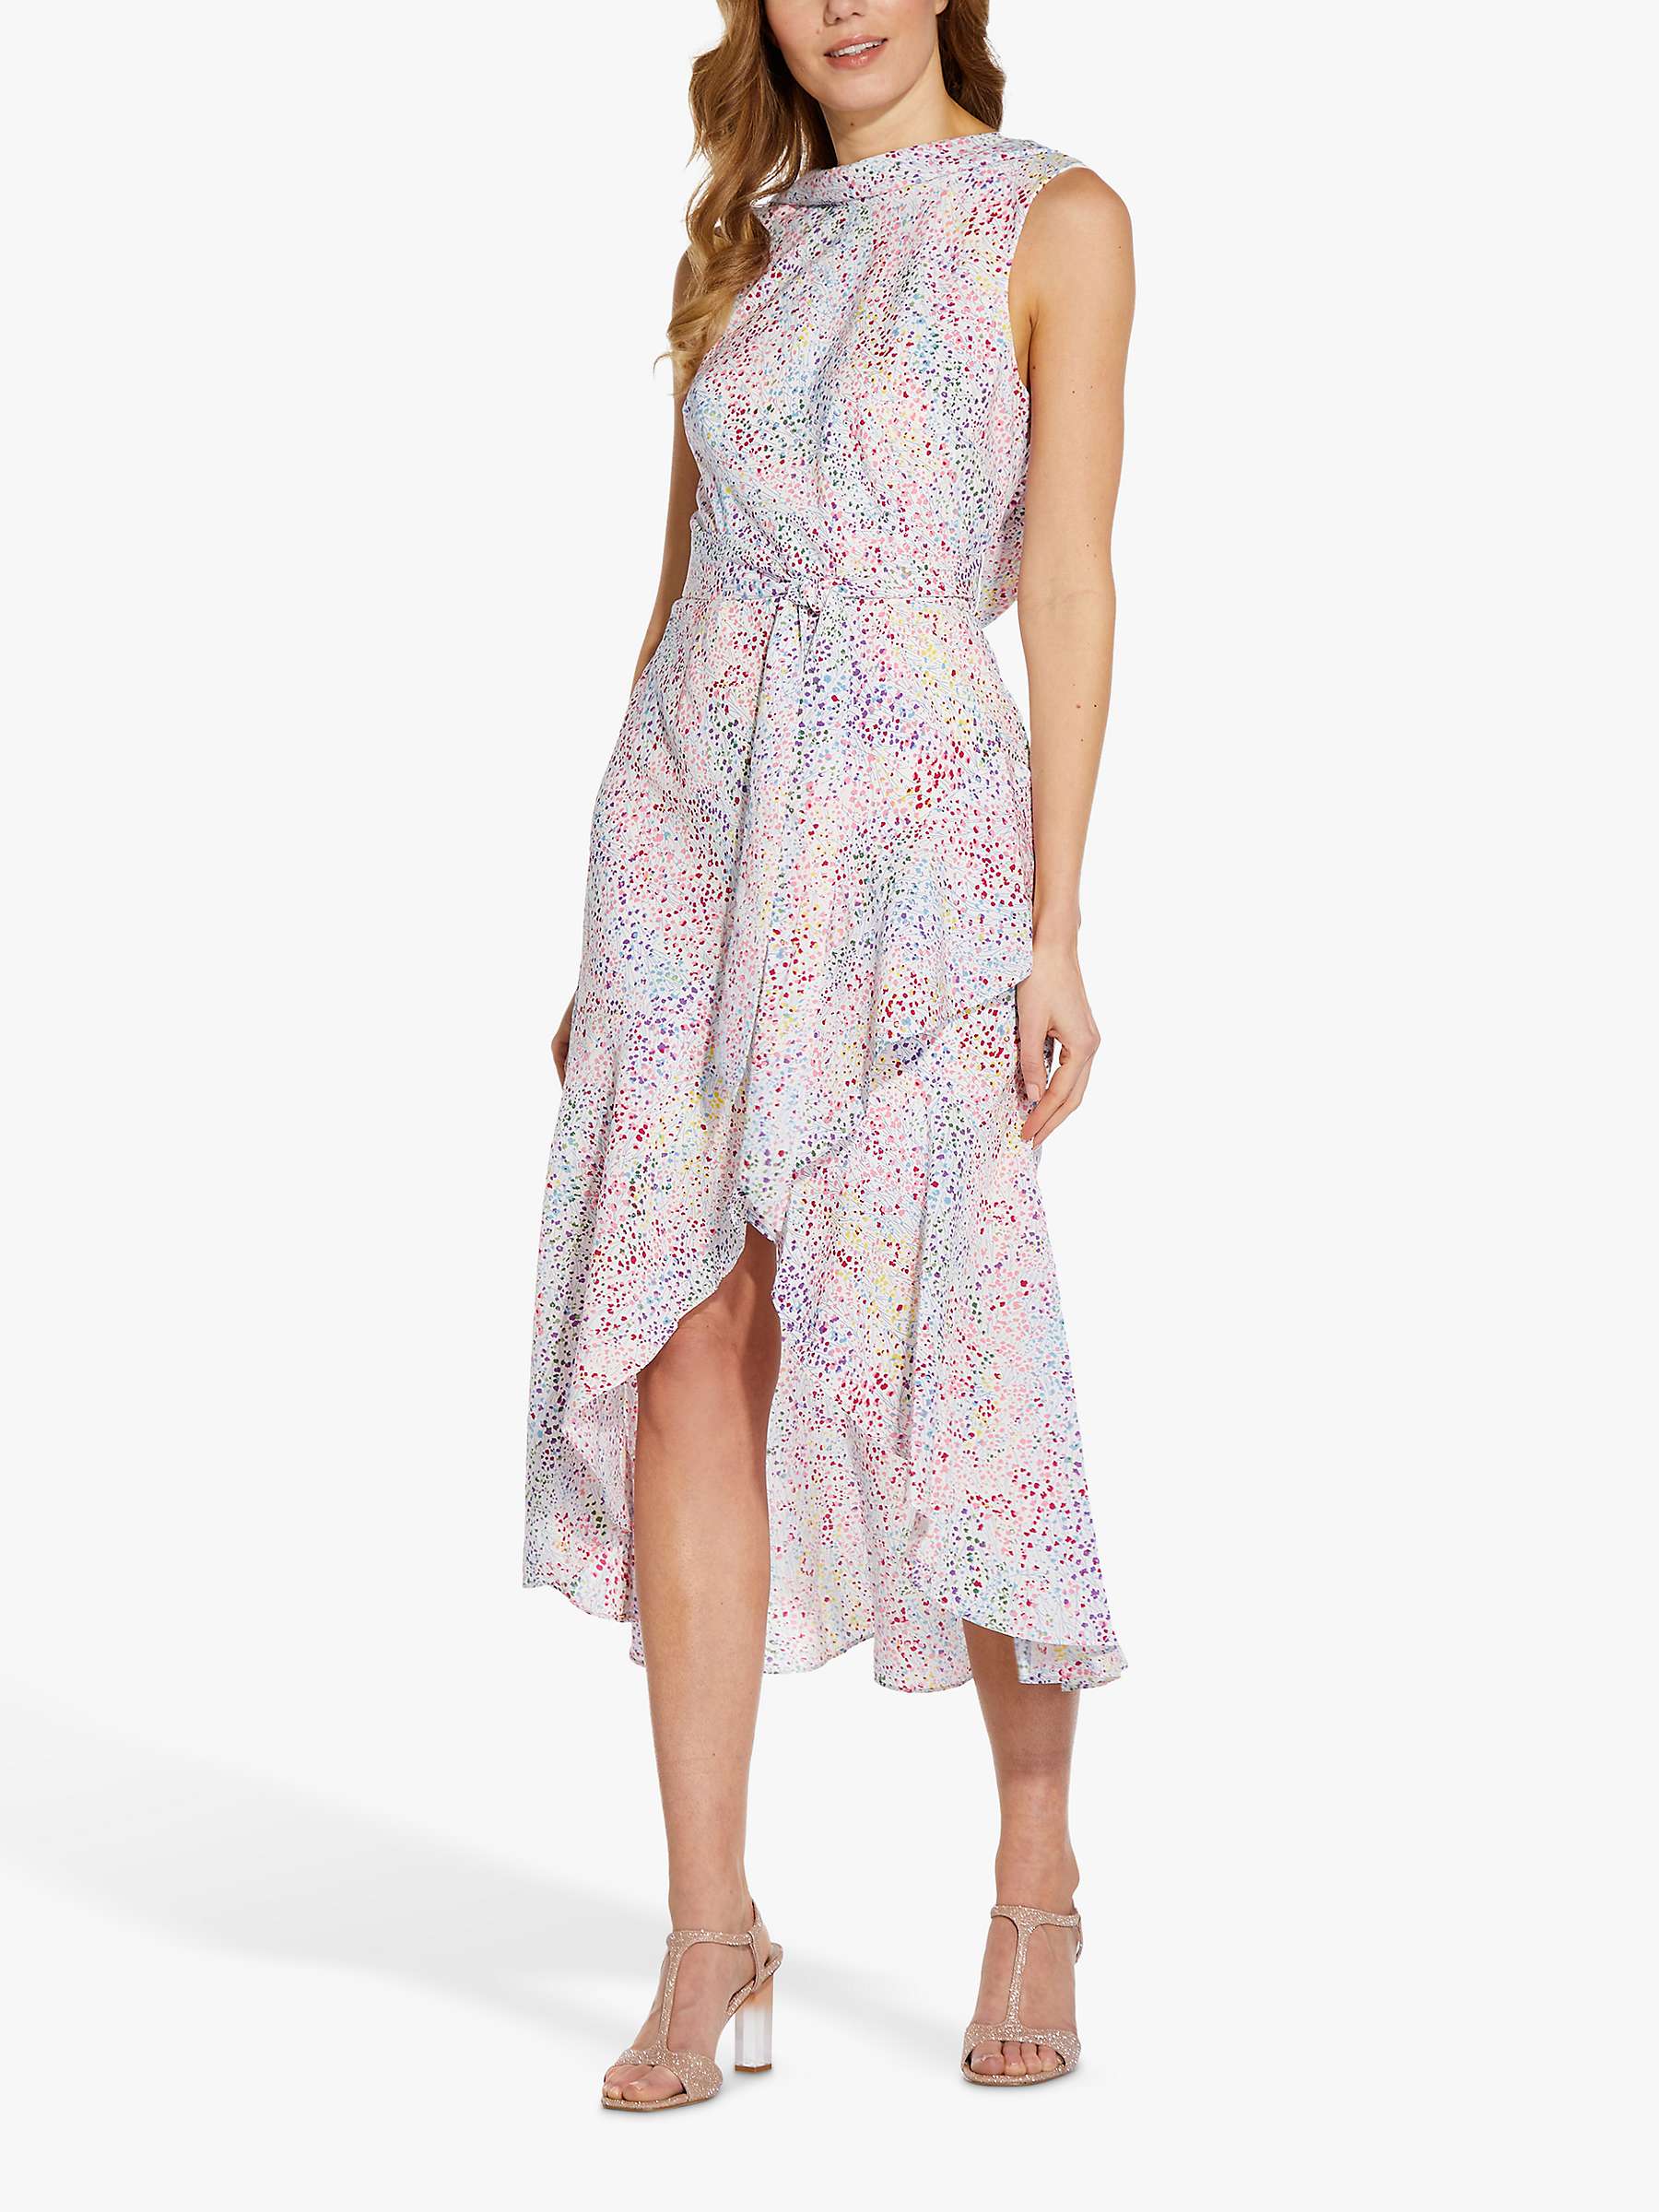 Buy Adrianna Papell Polka Dot Print Bias Cut Dress, Pink/Multi Online at johnlewis.com